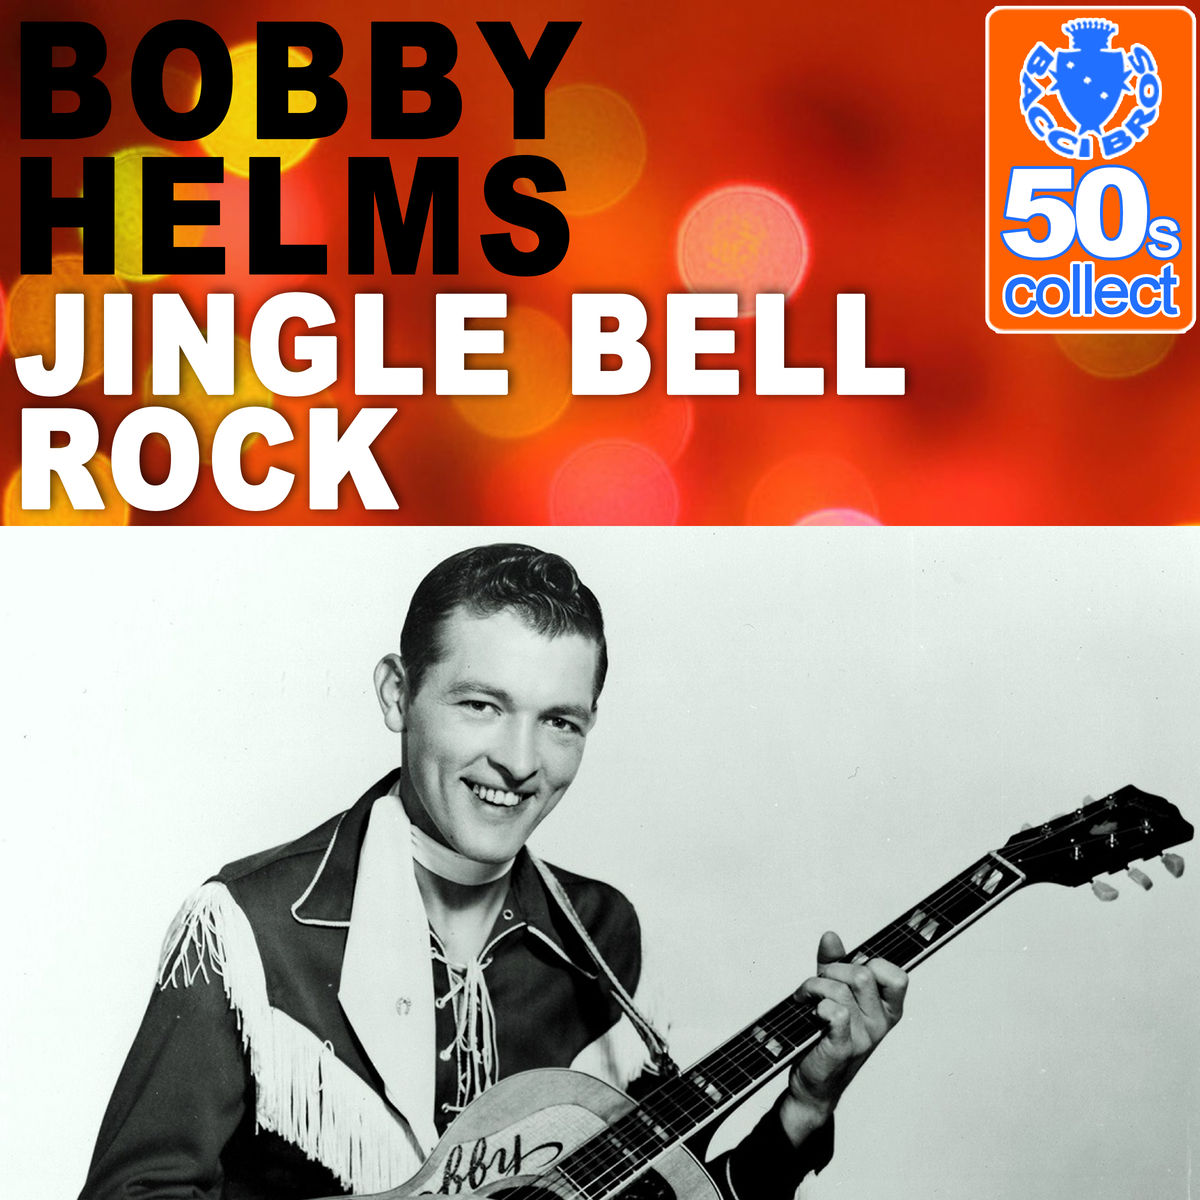 Bobby Helms - Jingle Bell Rock - dutchcharts.nl.